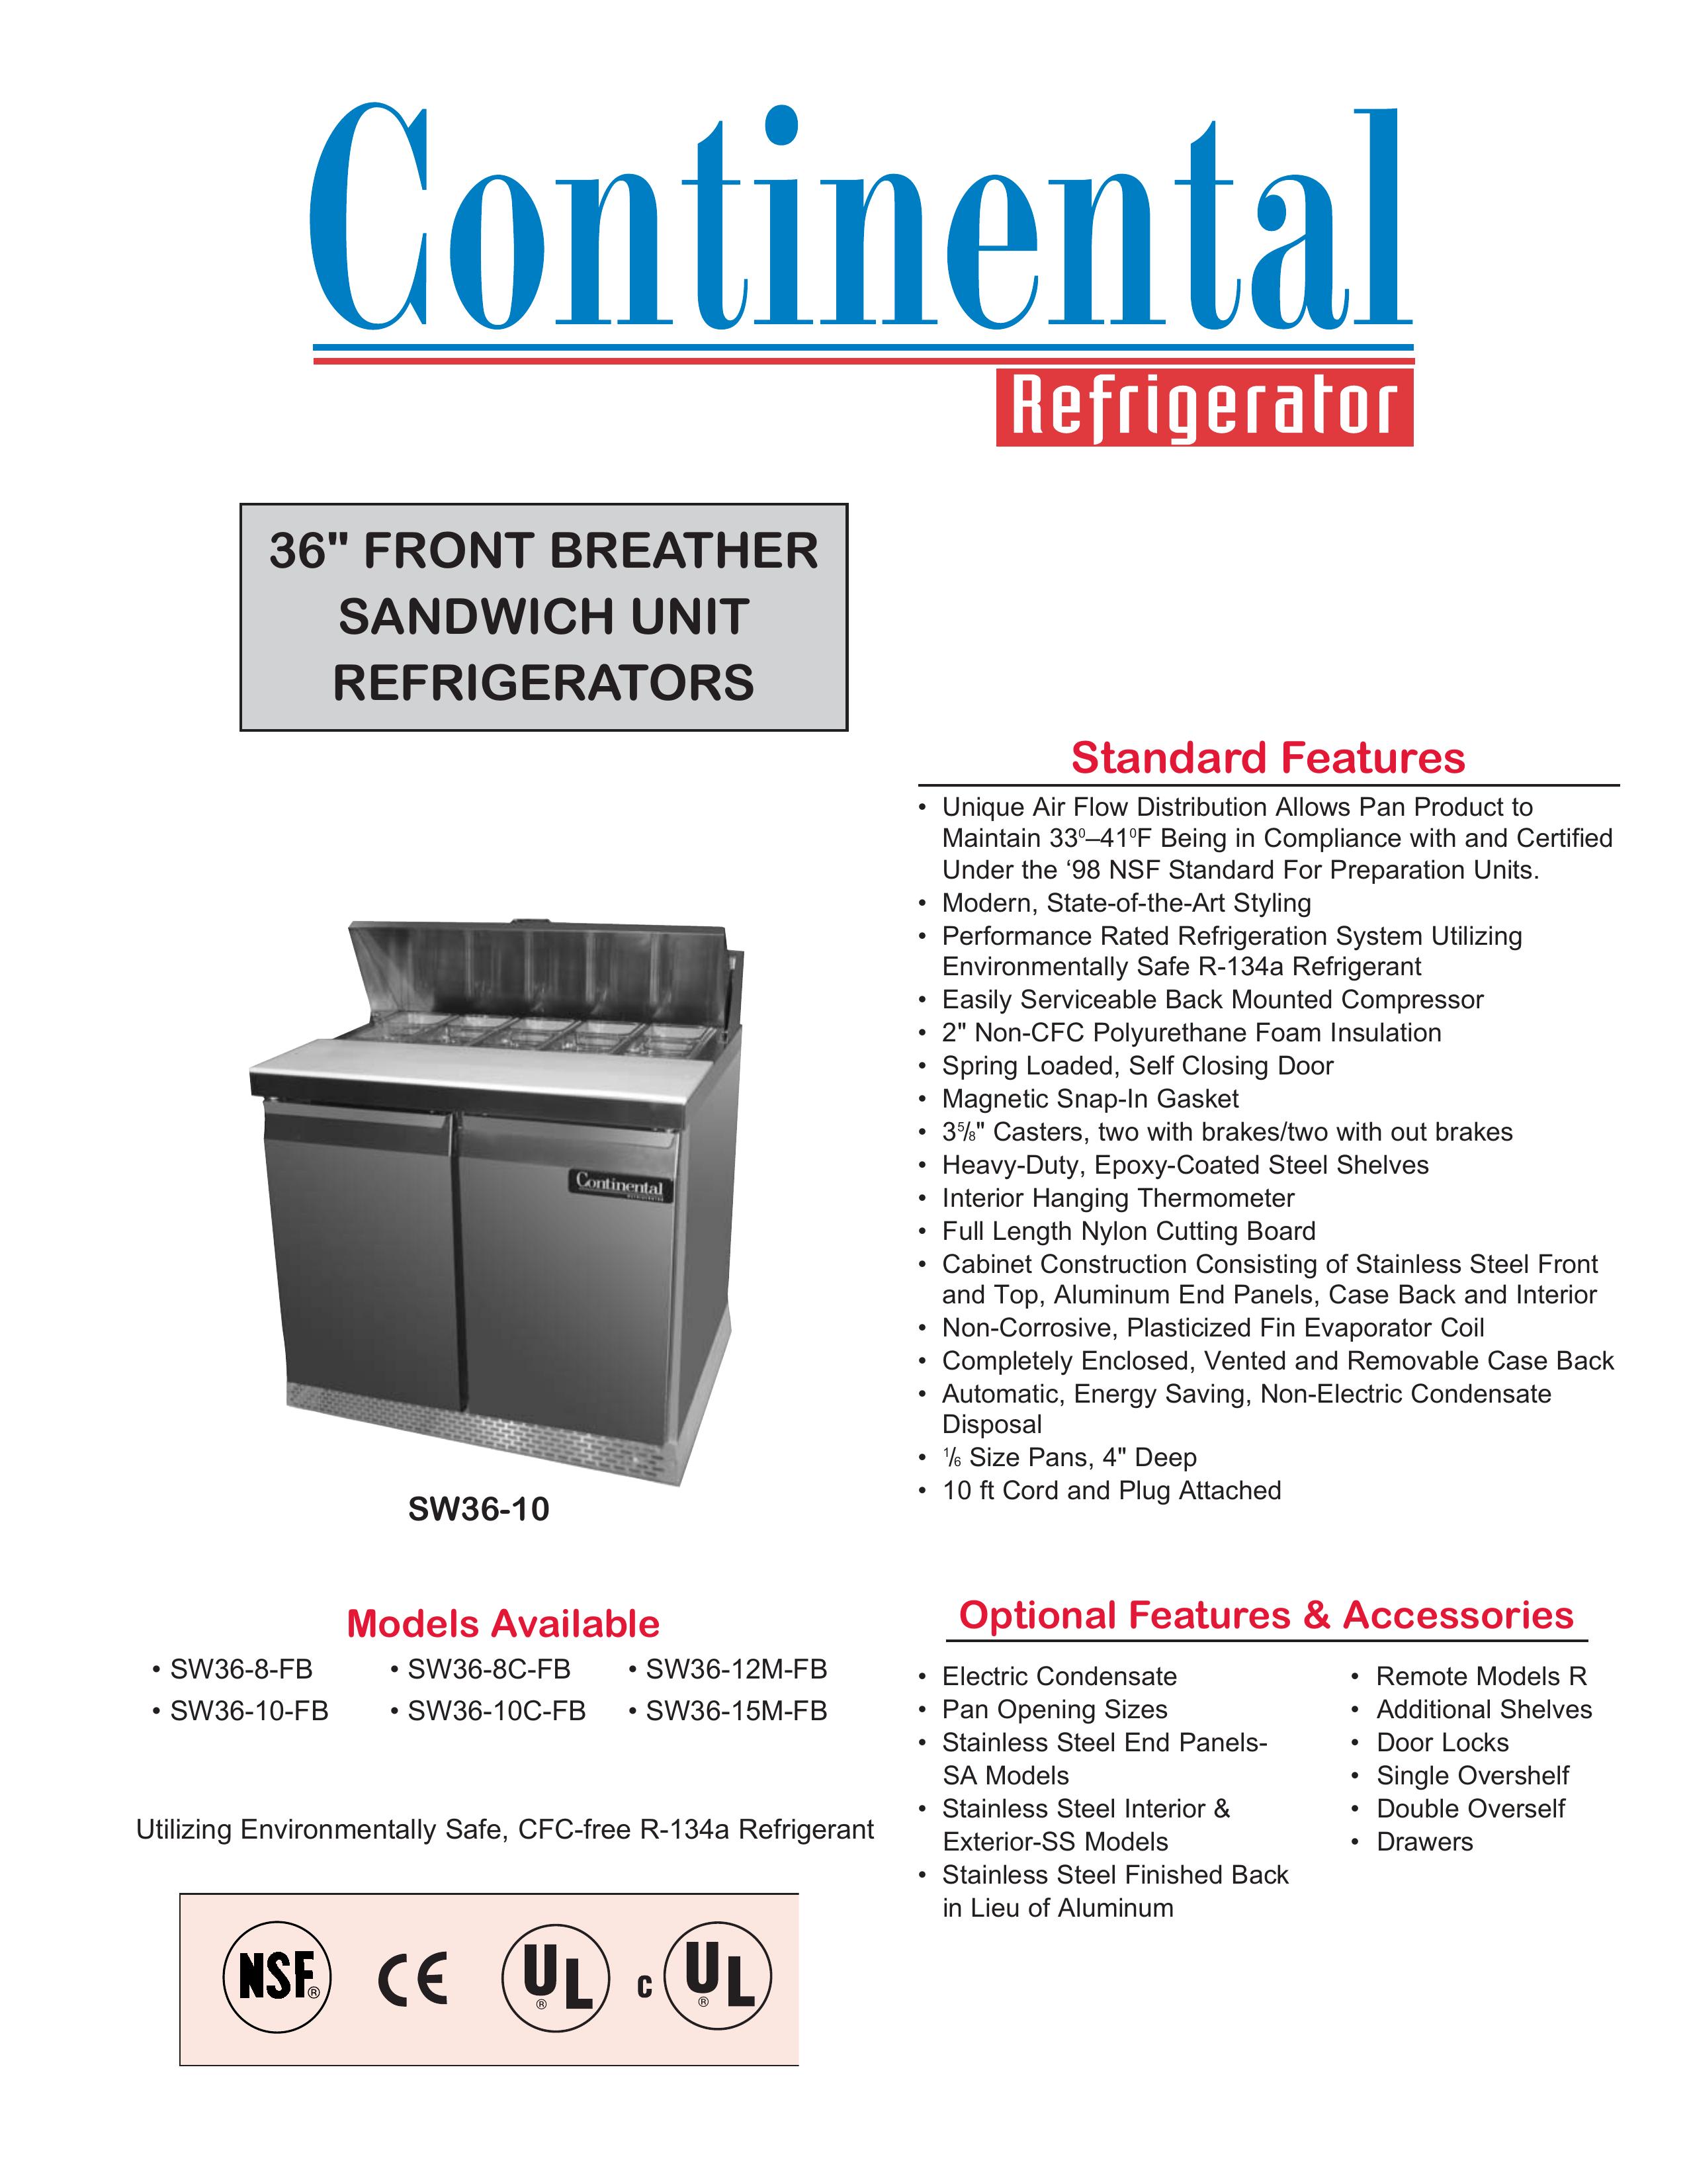 Continental Refrigerator SW36-12M-FB Refrigerator User Manual